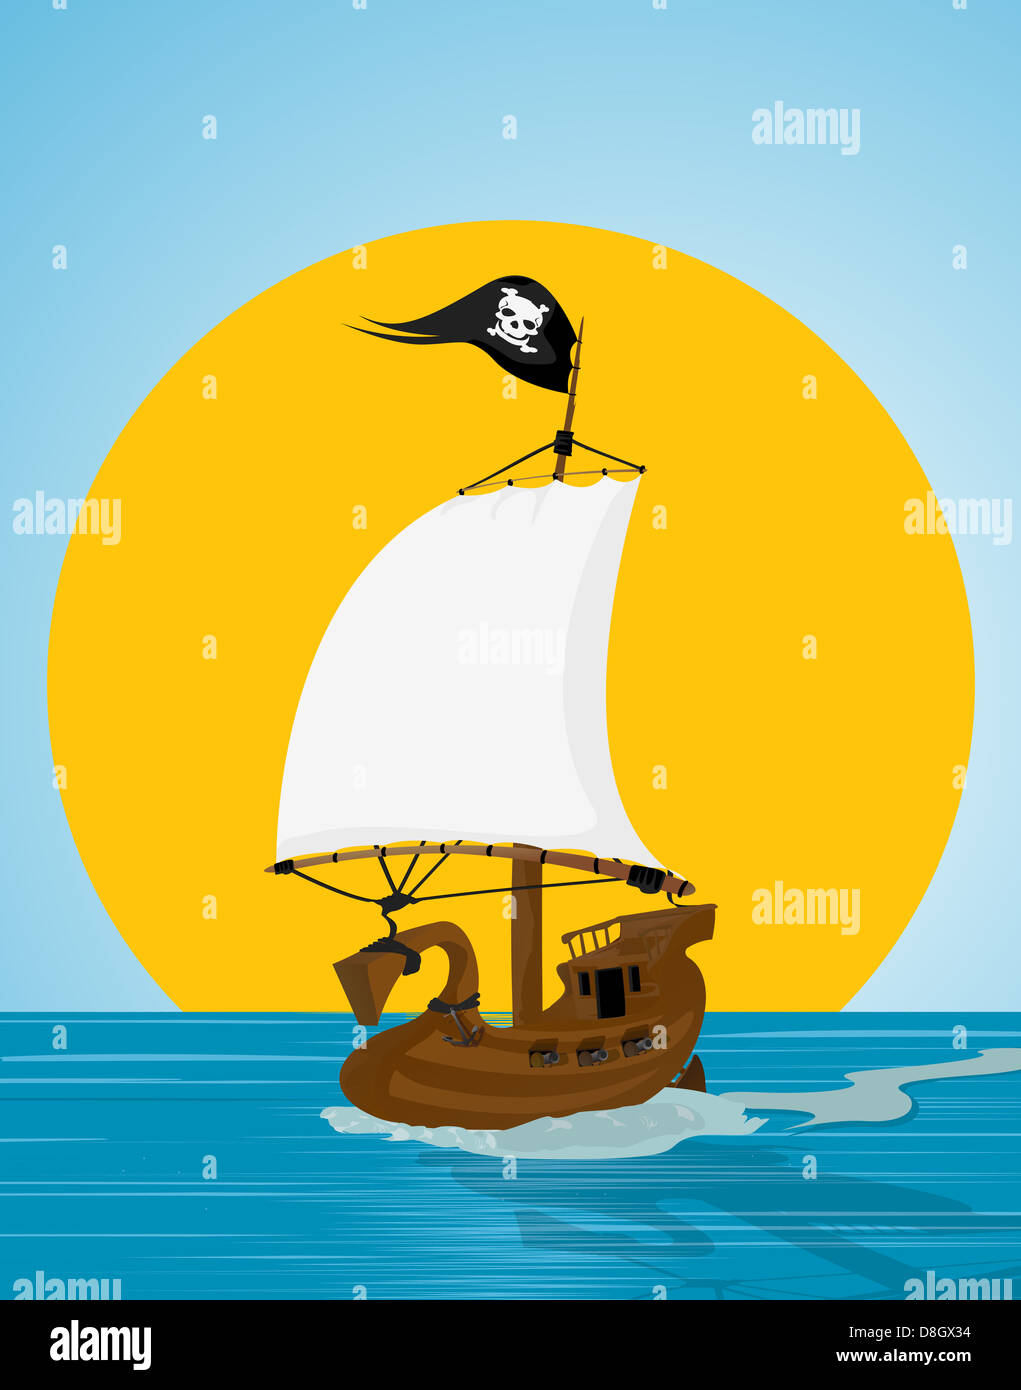 Pirate ship illustration Stock Photo